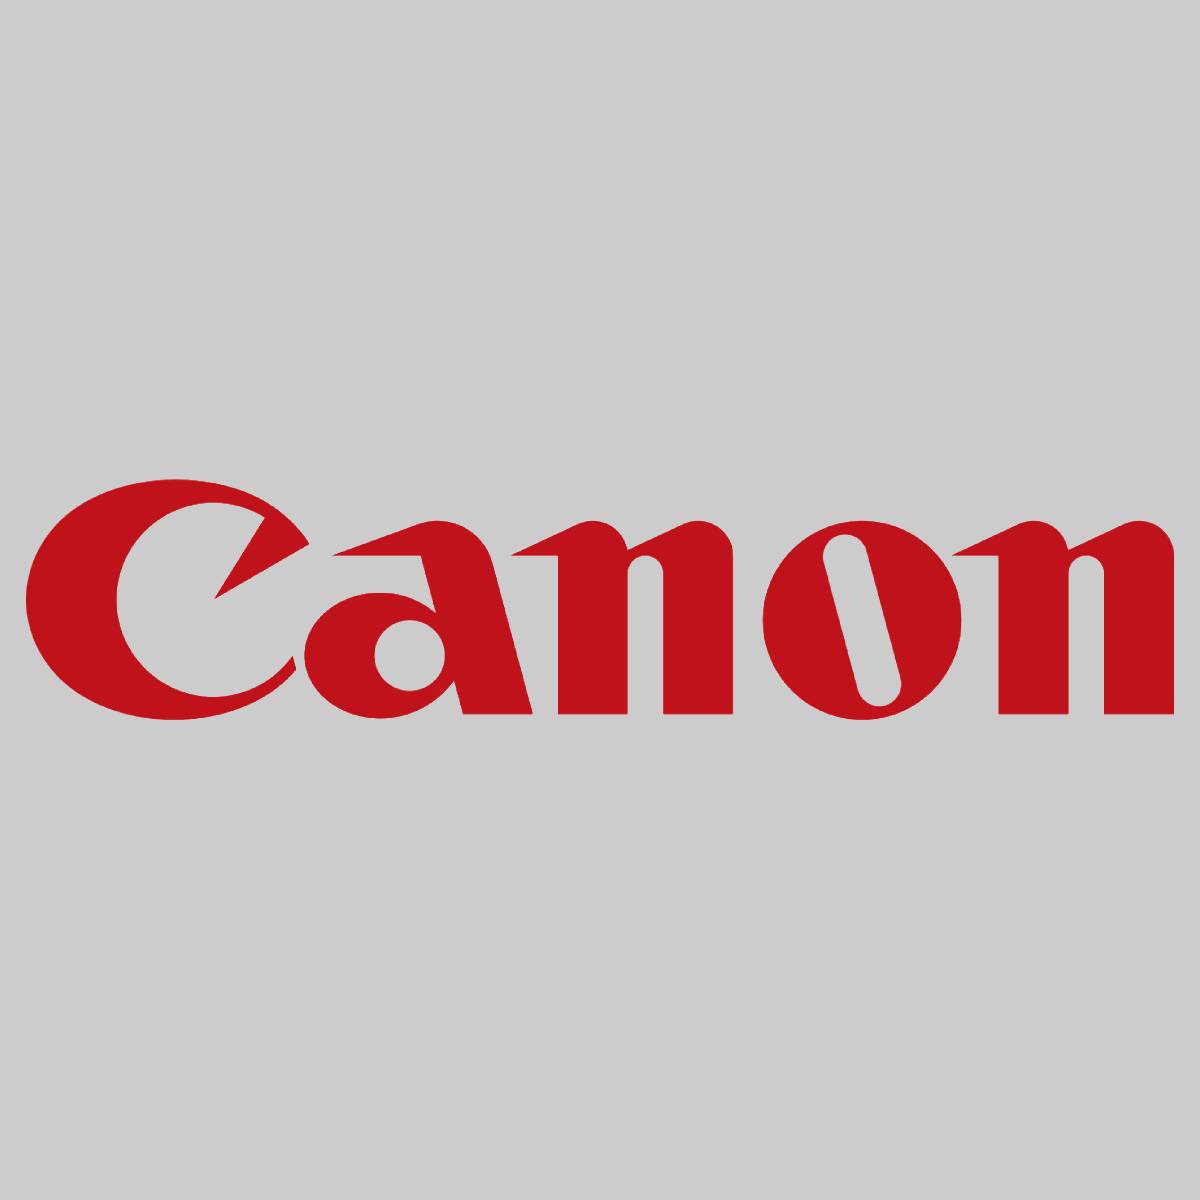 "Original Canon Transfer Roller 1 FC8-6852-000 for imagePRESS C6000 C7000 NEW^